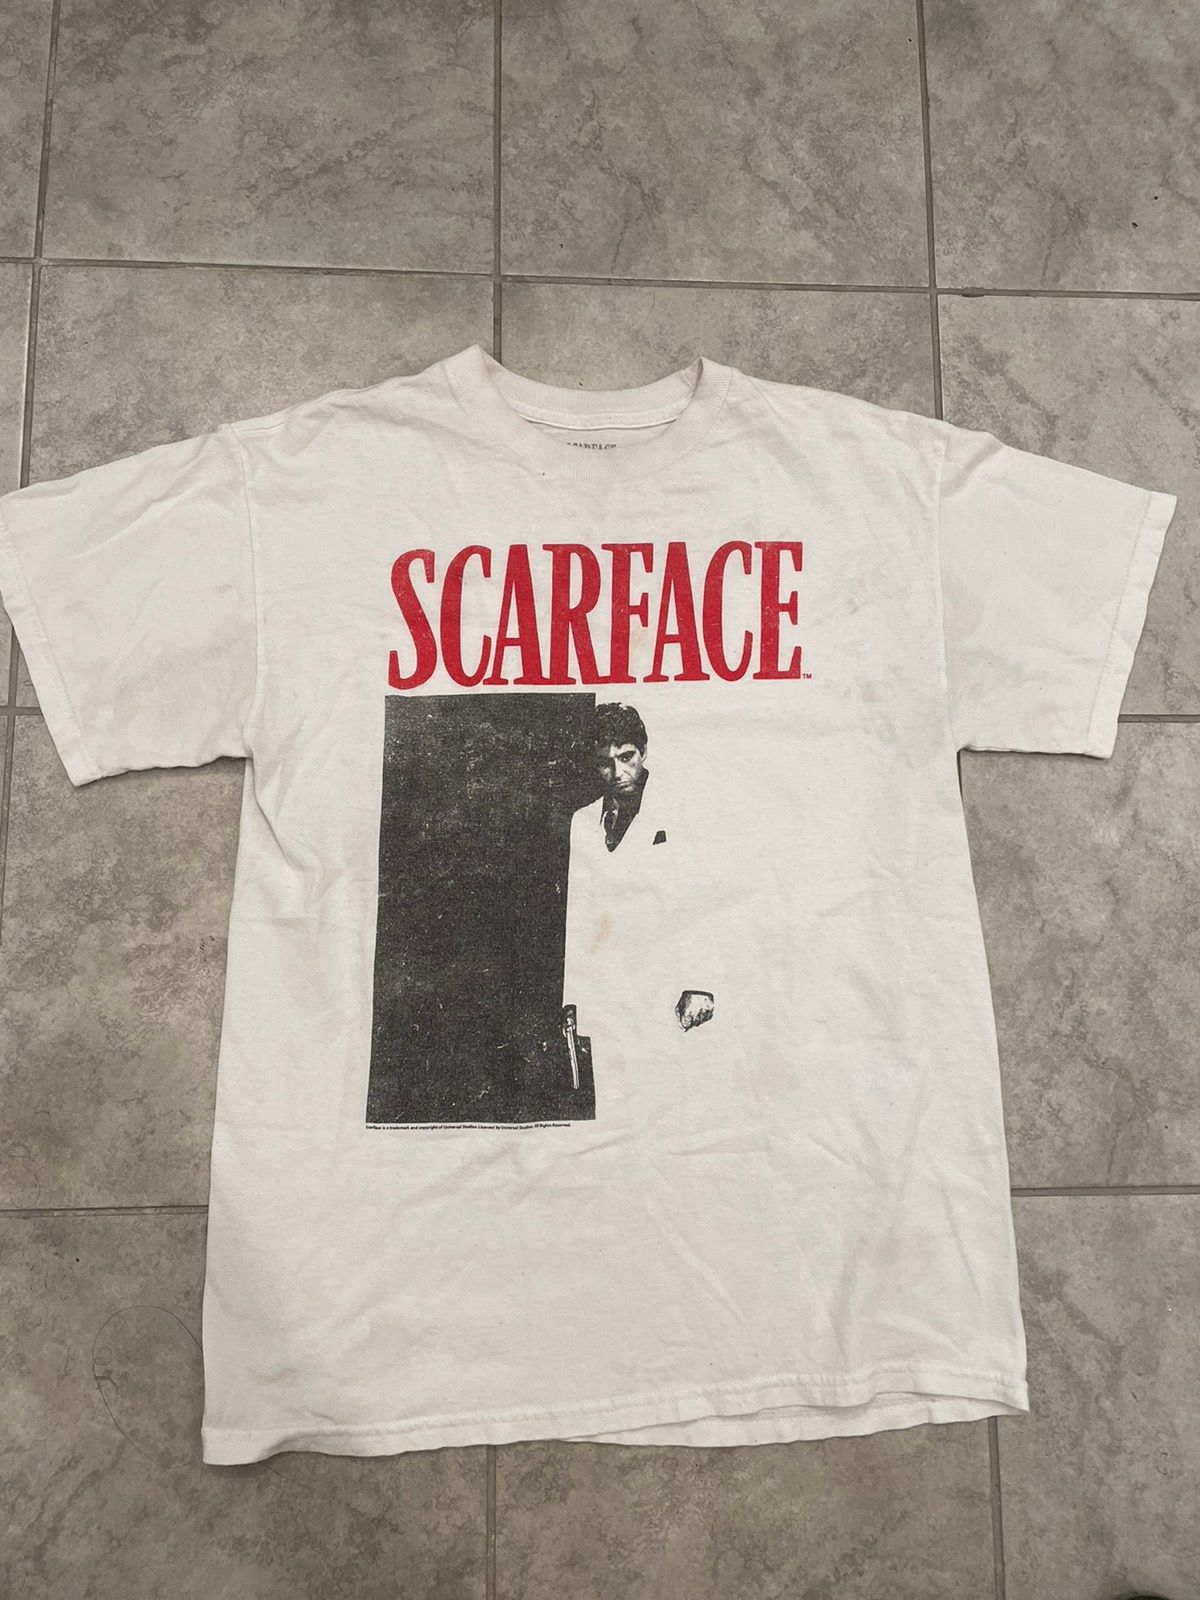 Vintage Universial Studios “Scarface” Tee Size US M / EU 48-50 / 2 - 1 Preview